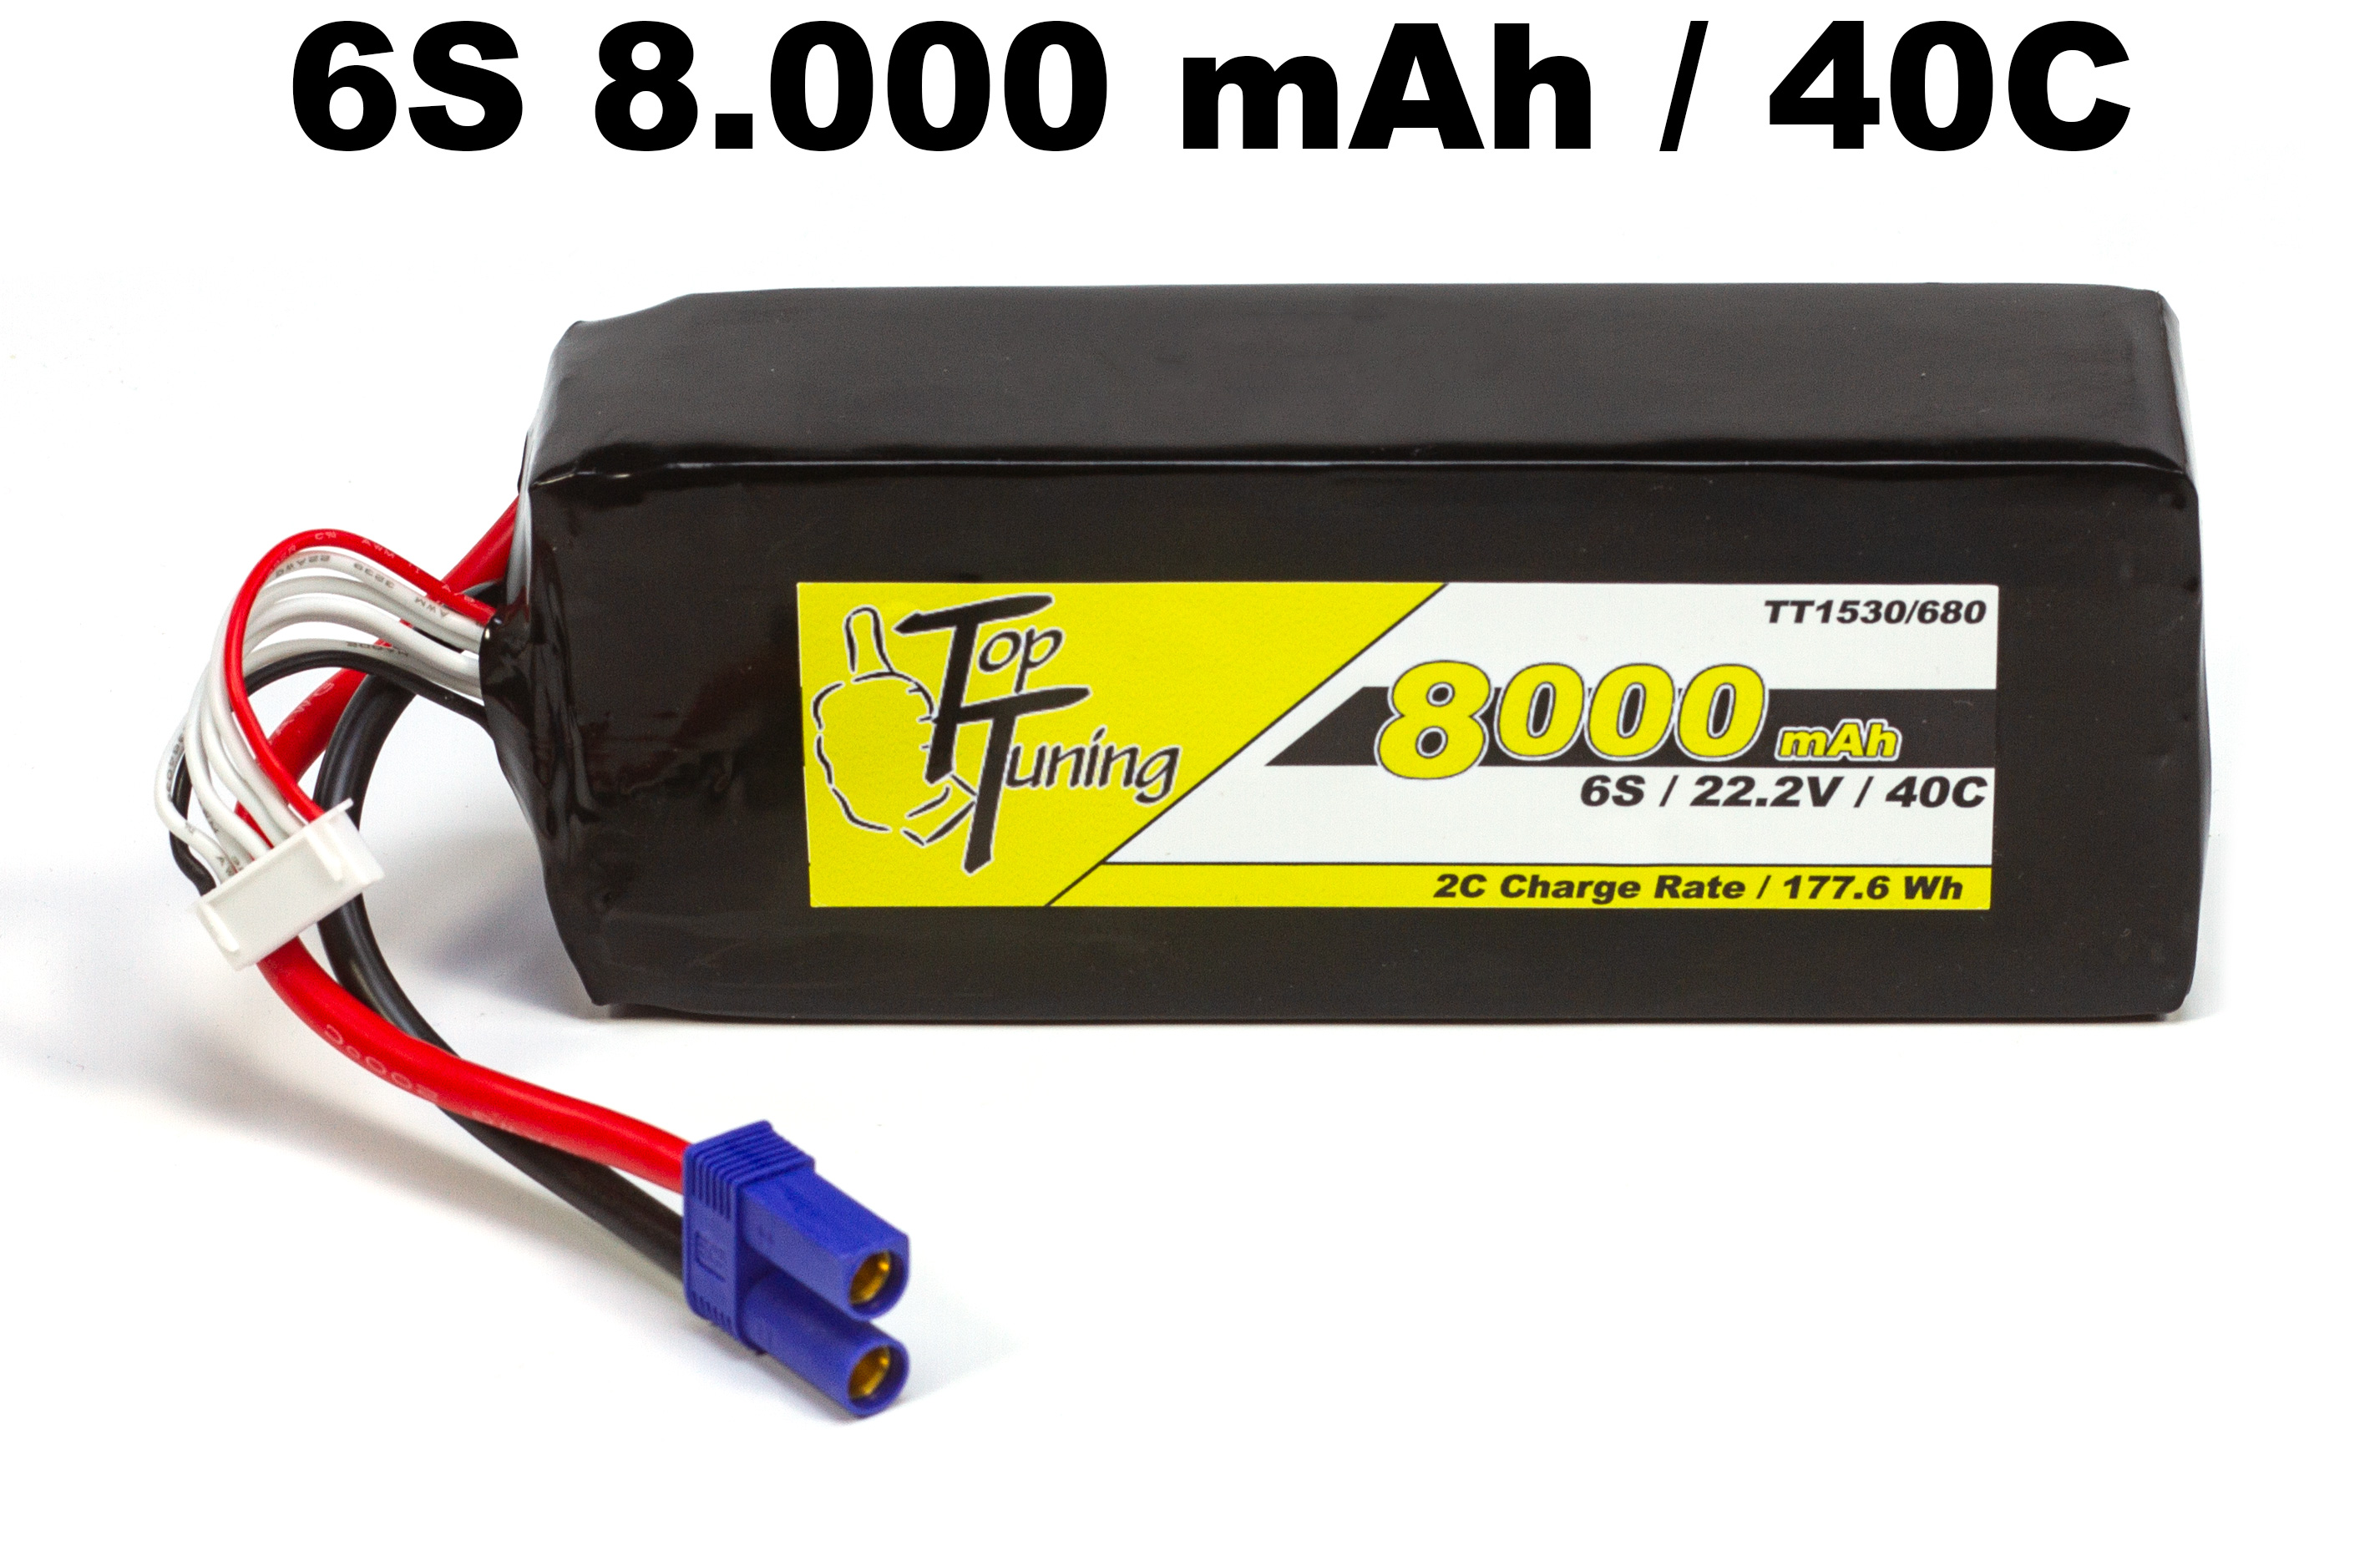 TT1530/680 Top Tuning 8000 mAh LiPo battery 6S, 22.2V 40C Offer